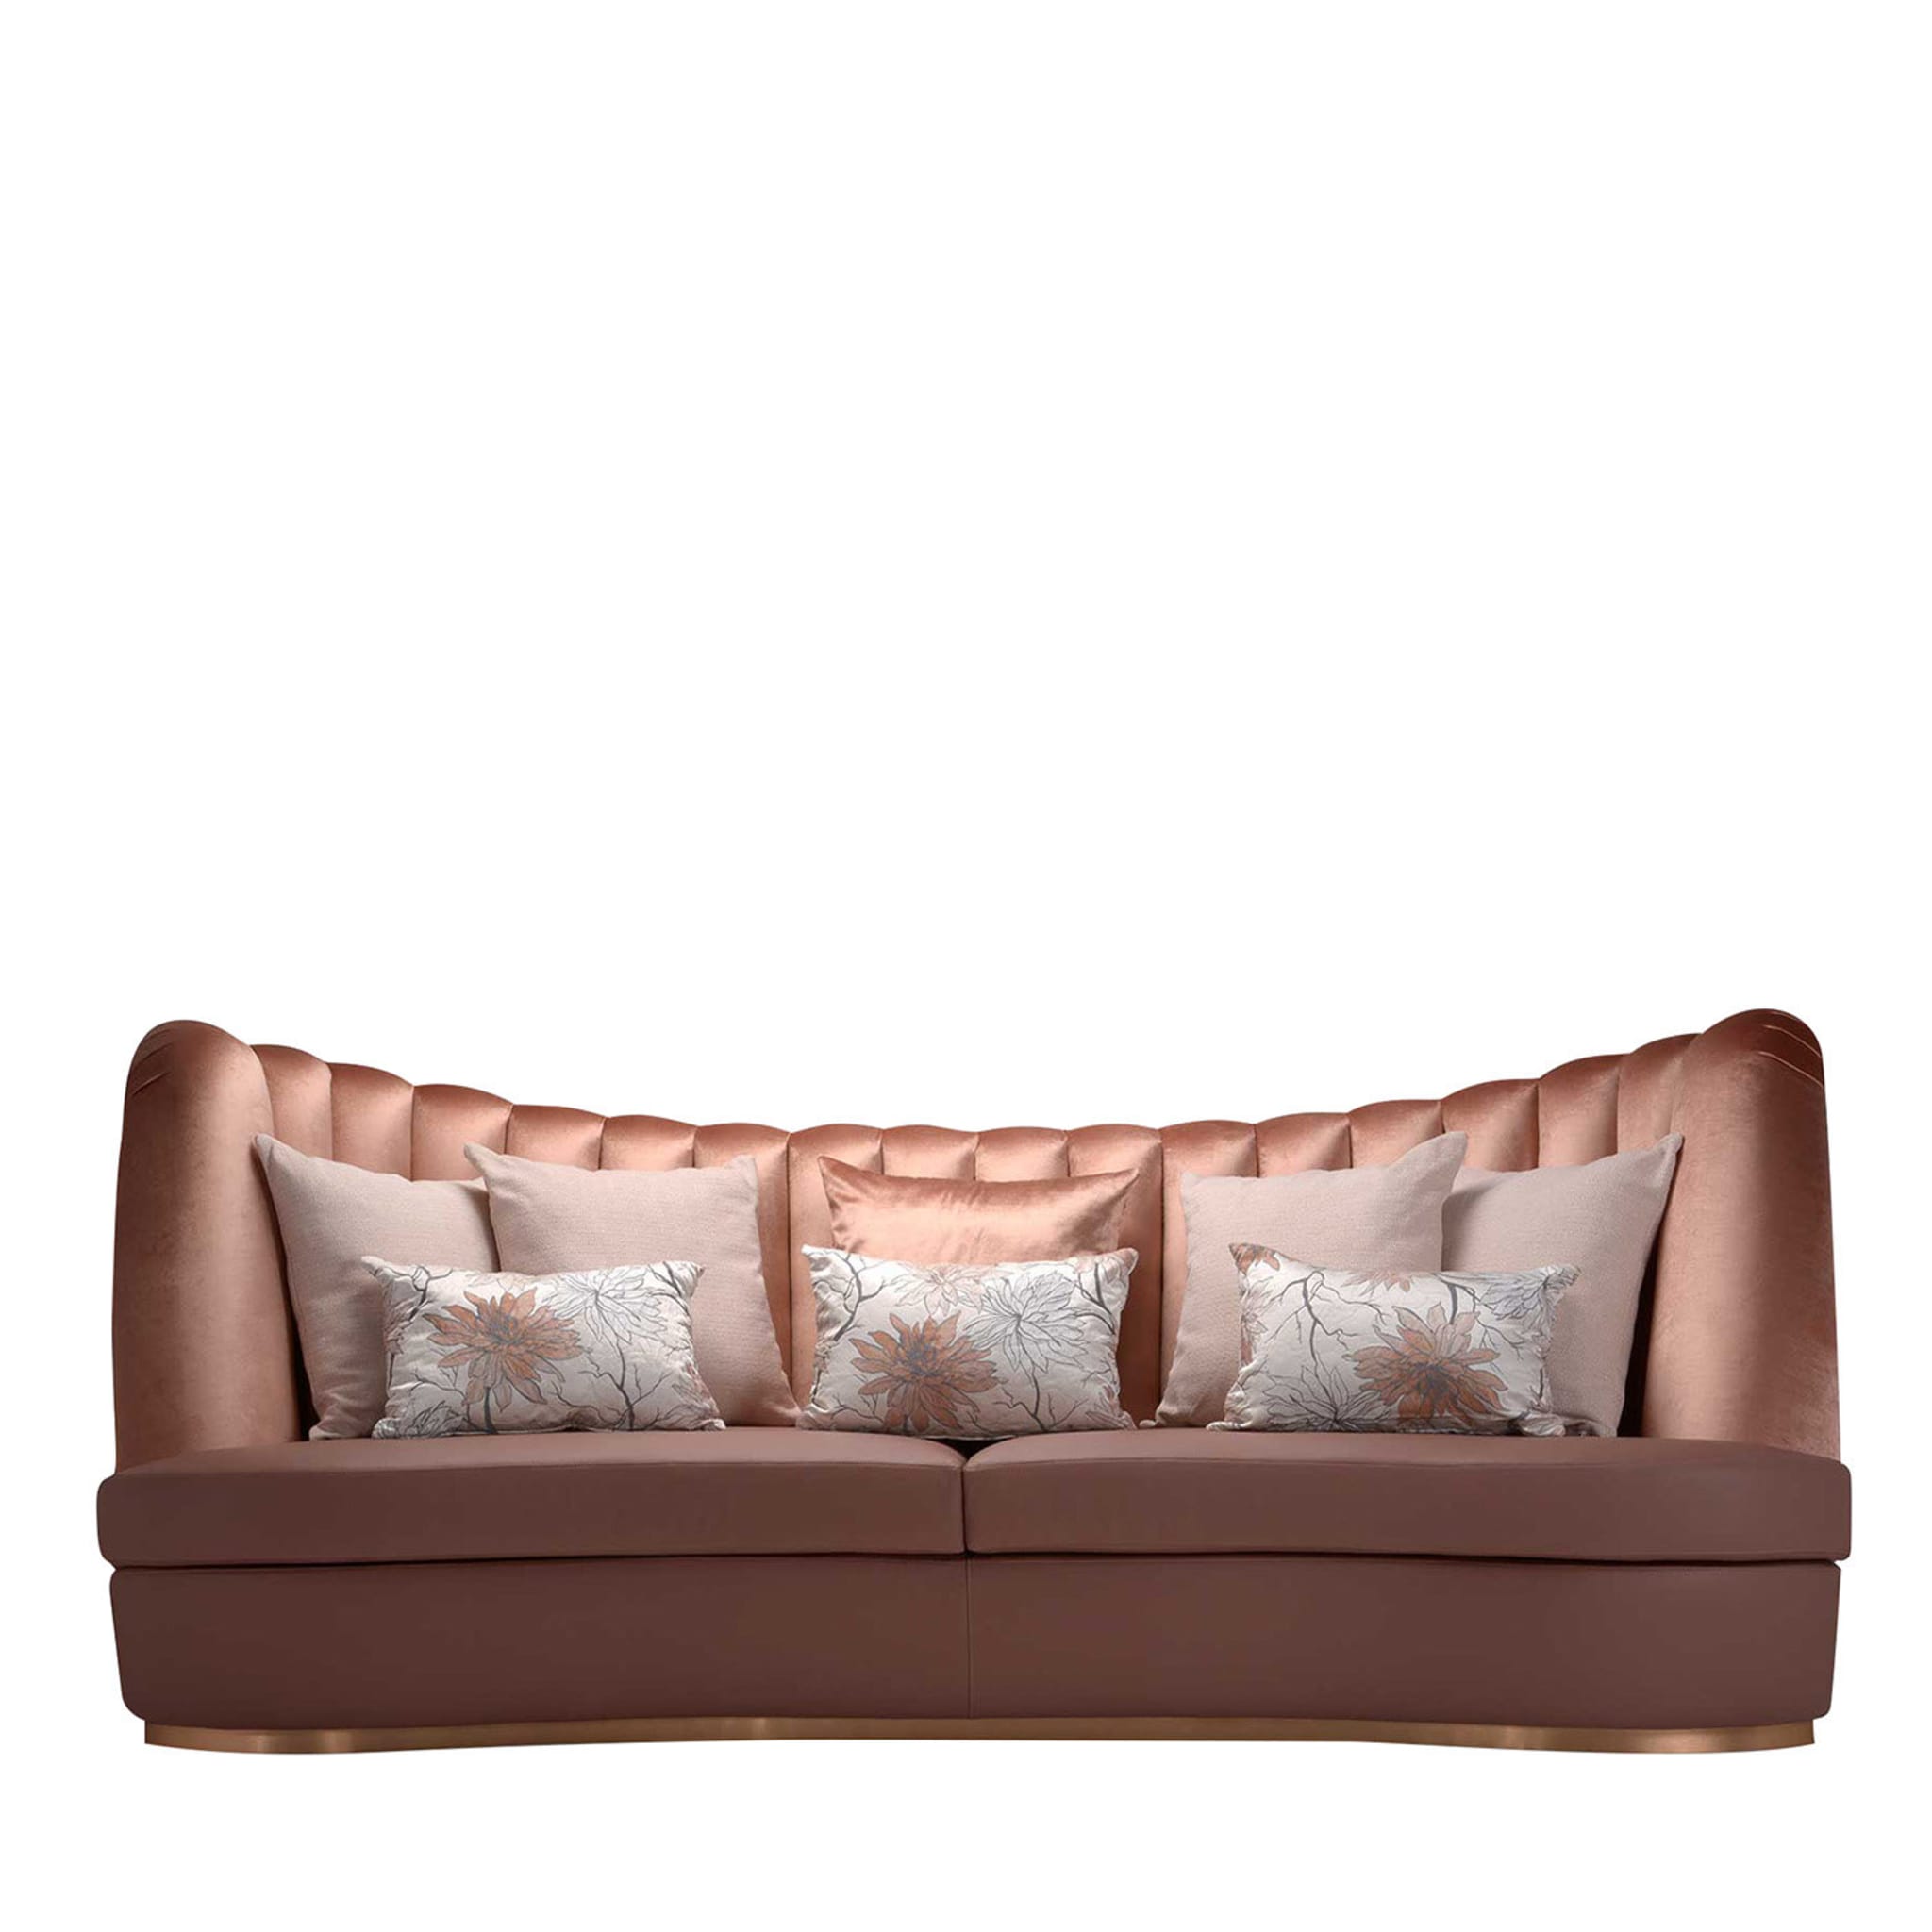 Thalia Pink 3-Seater Sofa - Main view